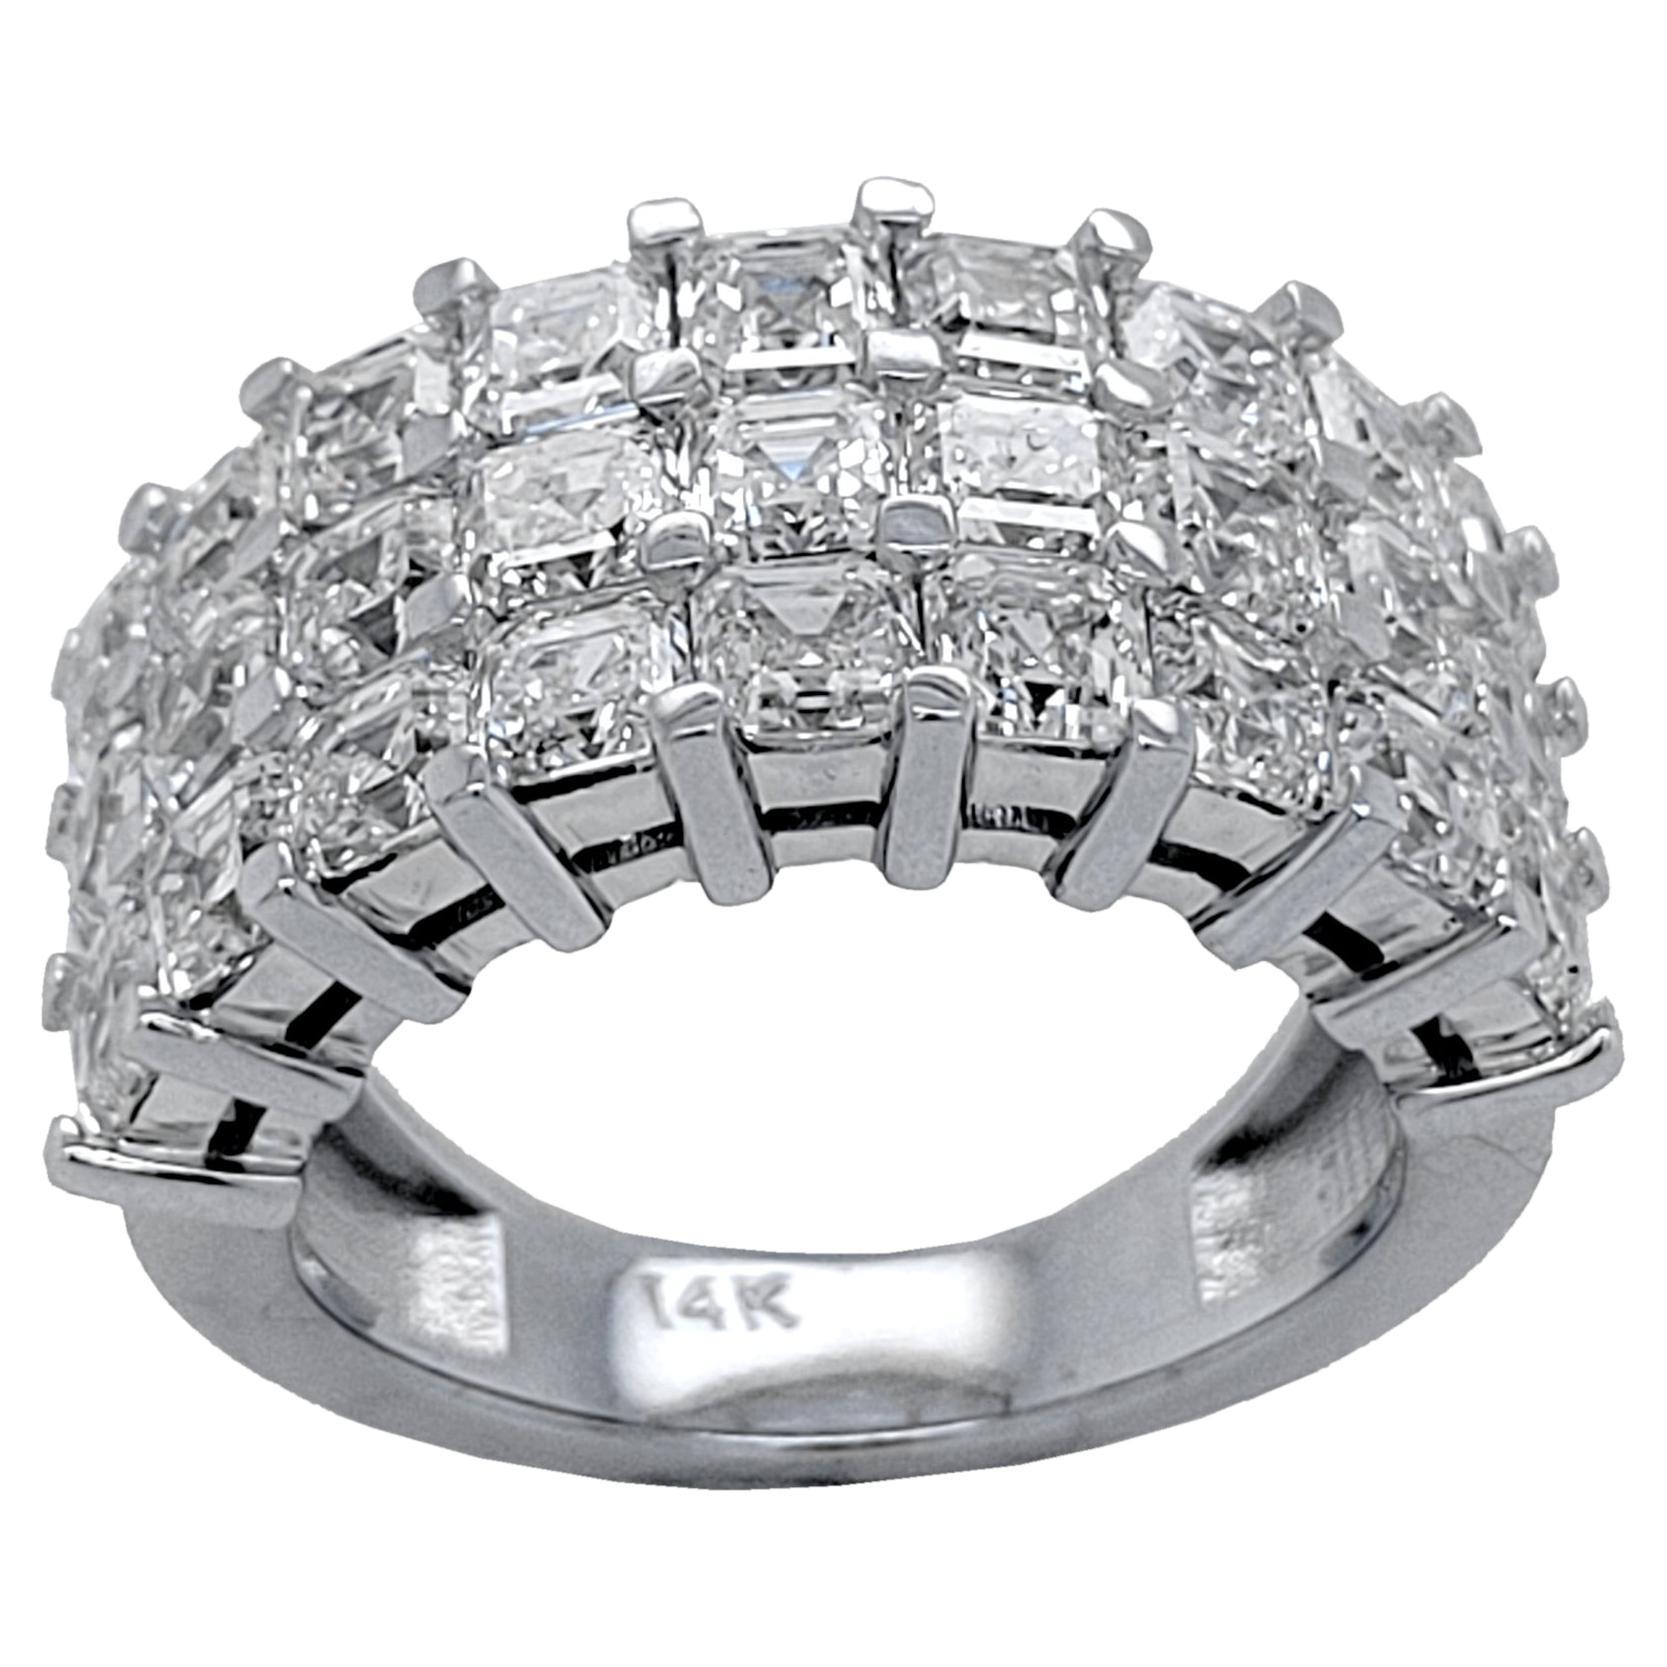 5.31 Ct 3 Row Asscher Cut 'Square Emerald Cut' Diamond Anniversary Ring